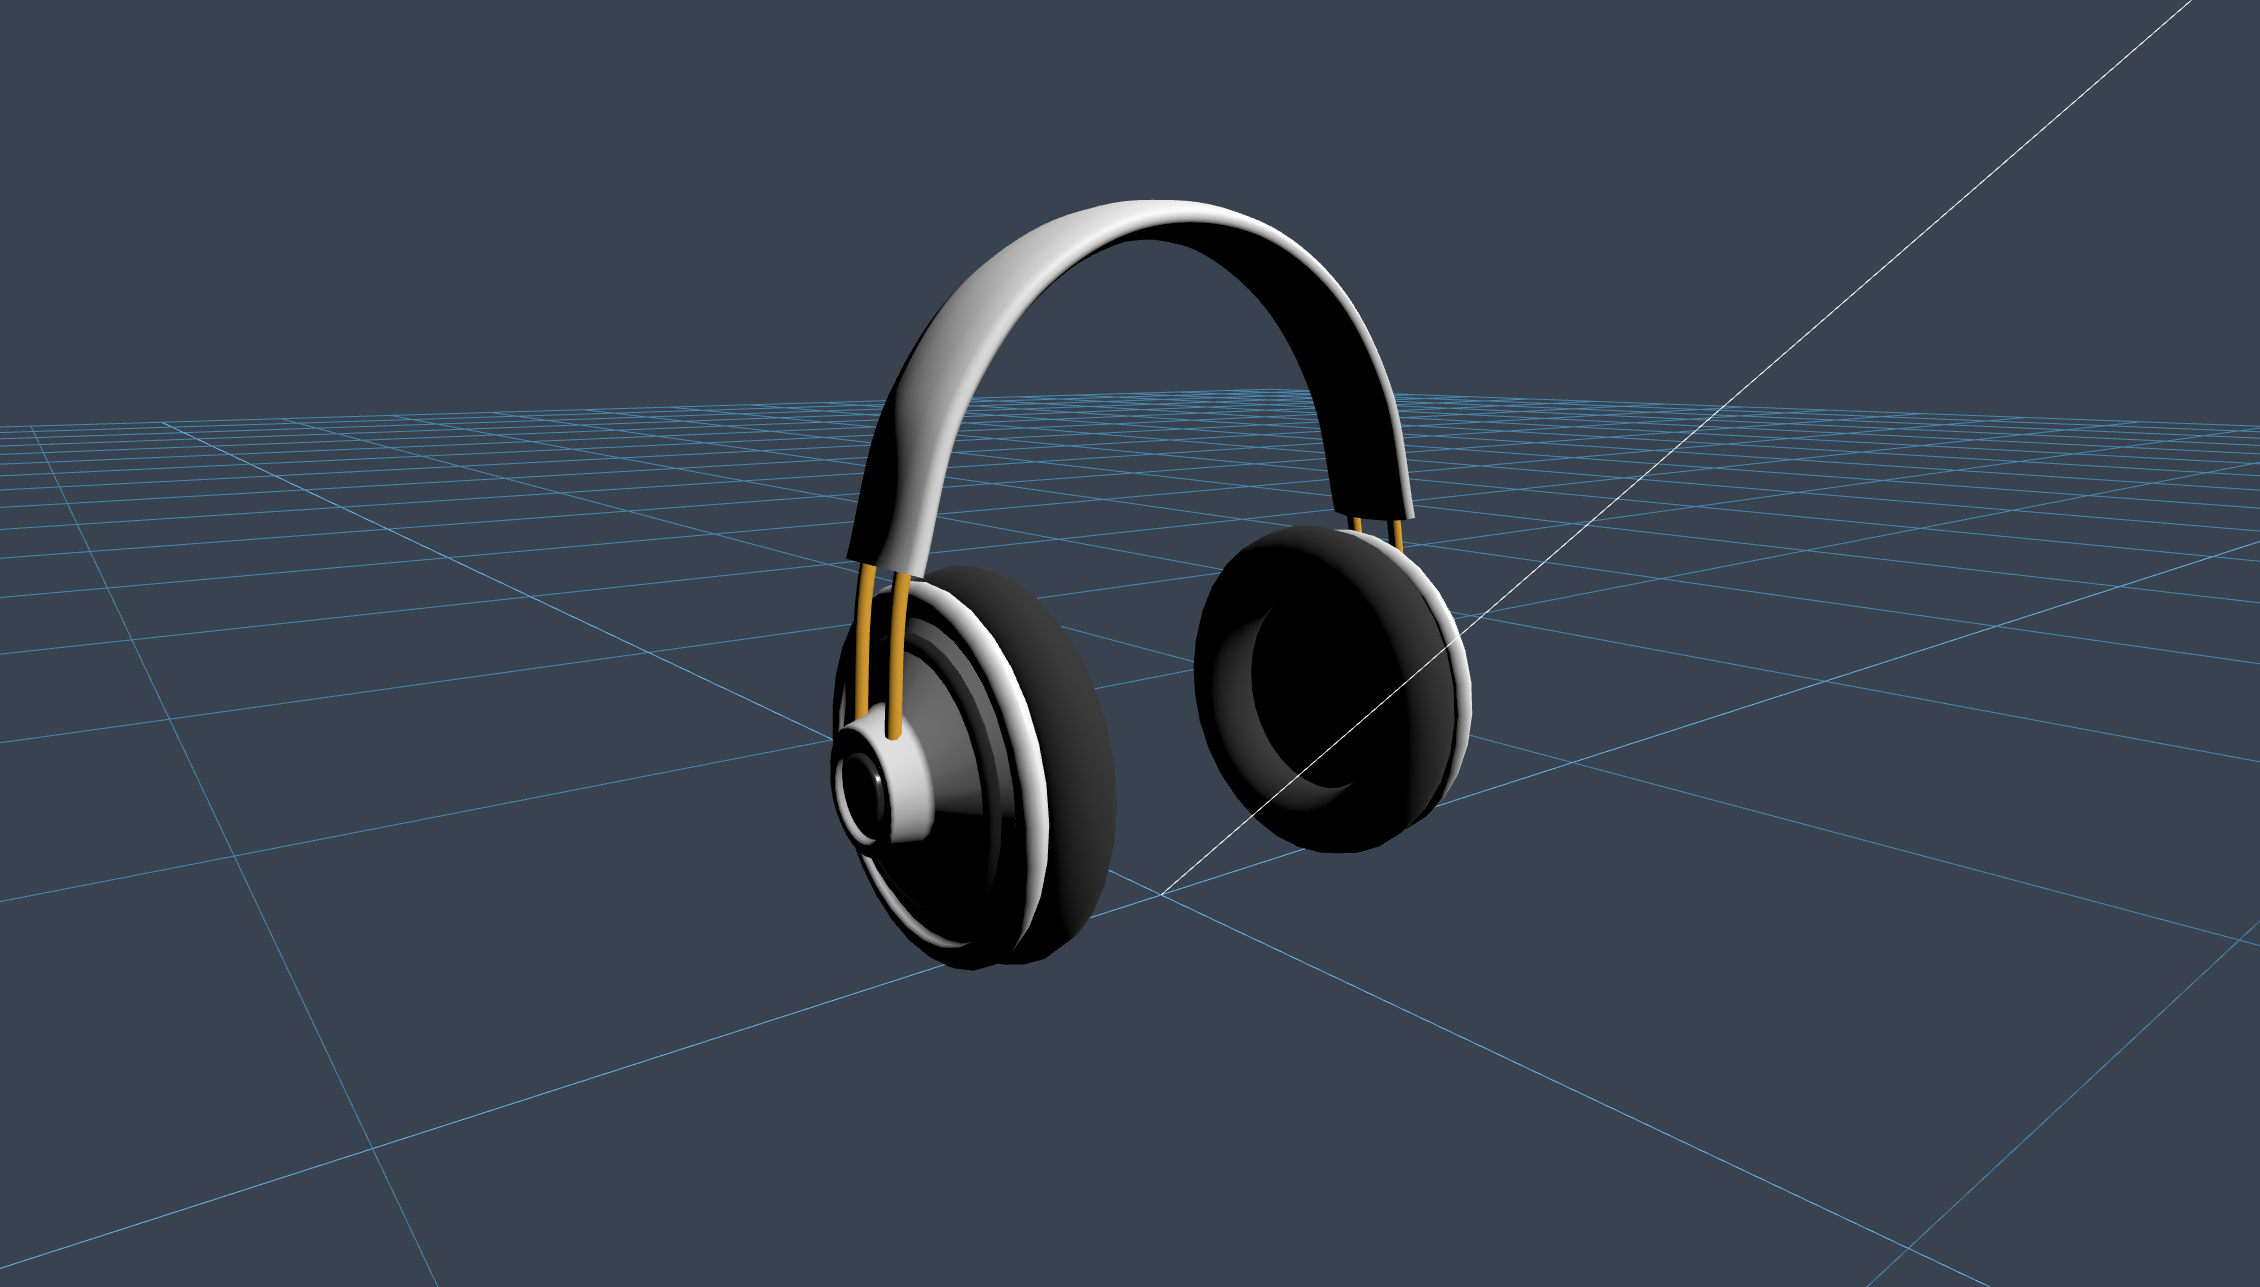 Headphones - Niilo Korppi द्वारा निर्मित 3D के साथ